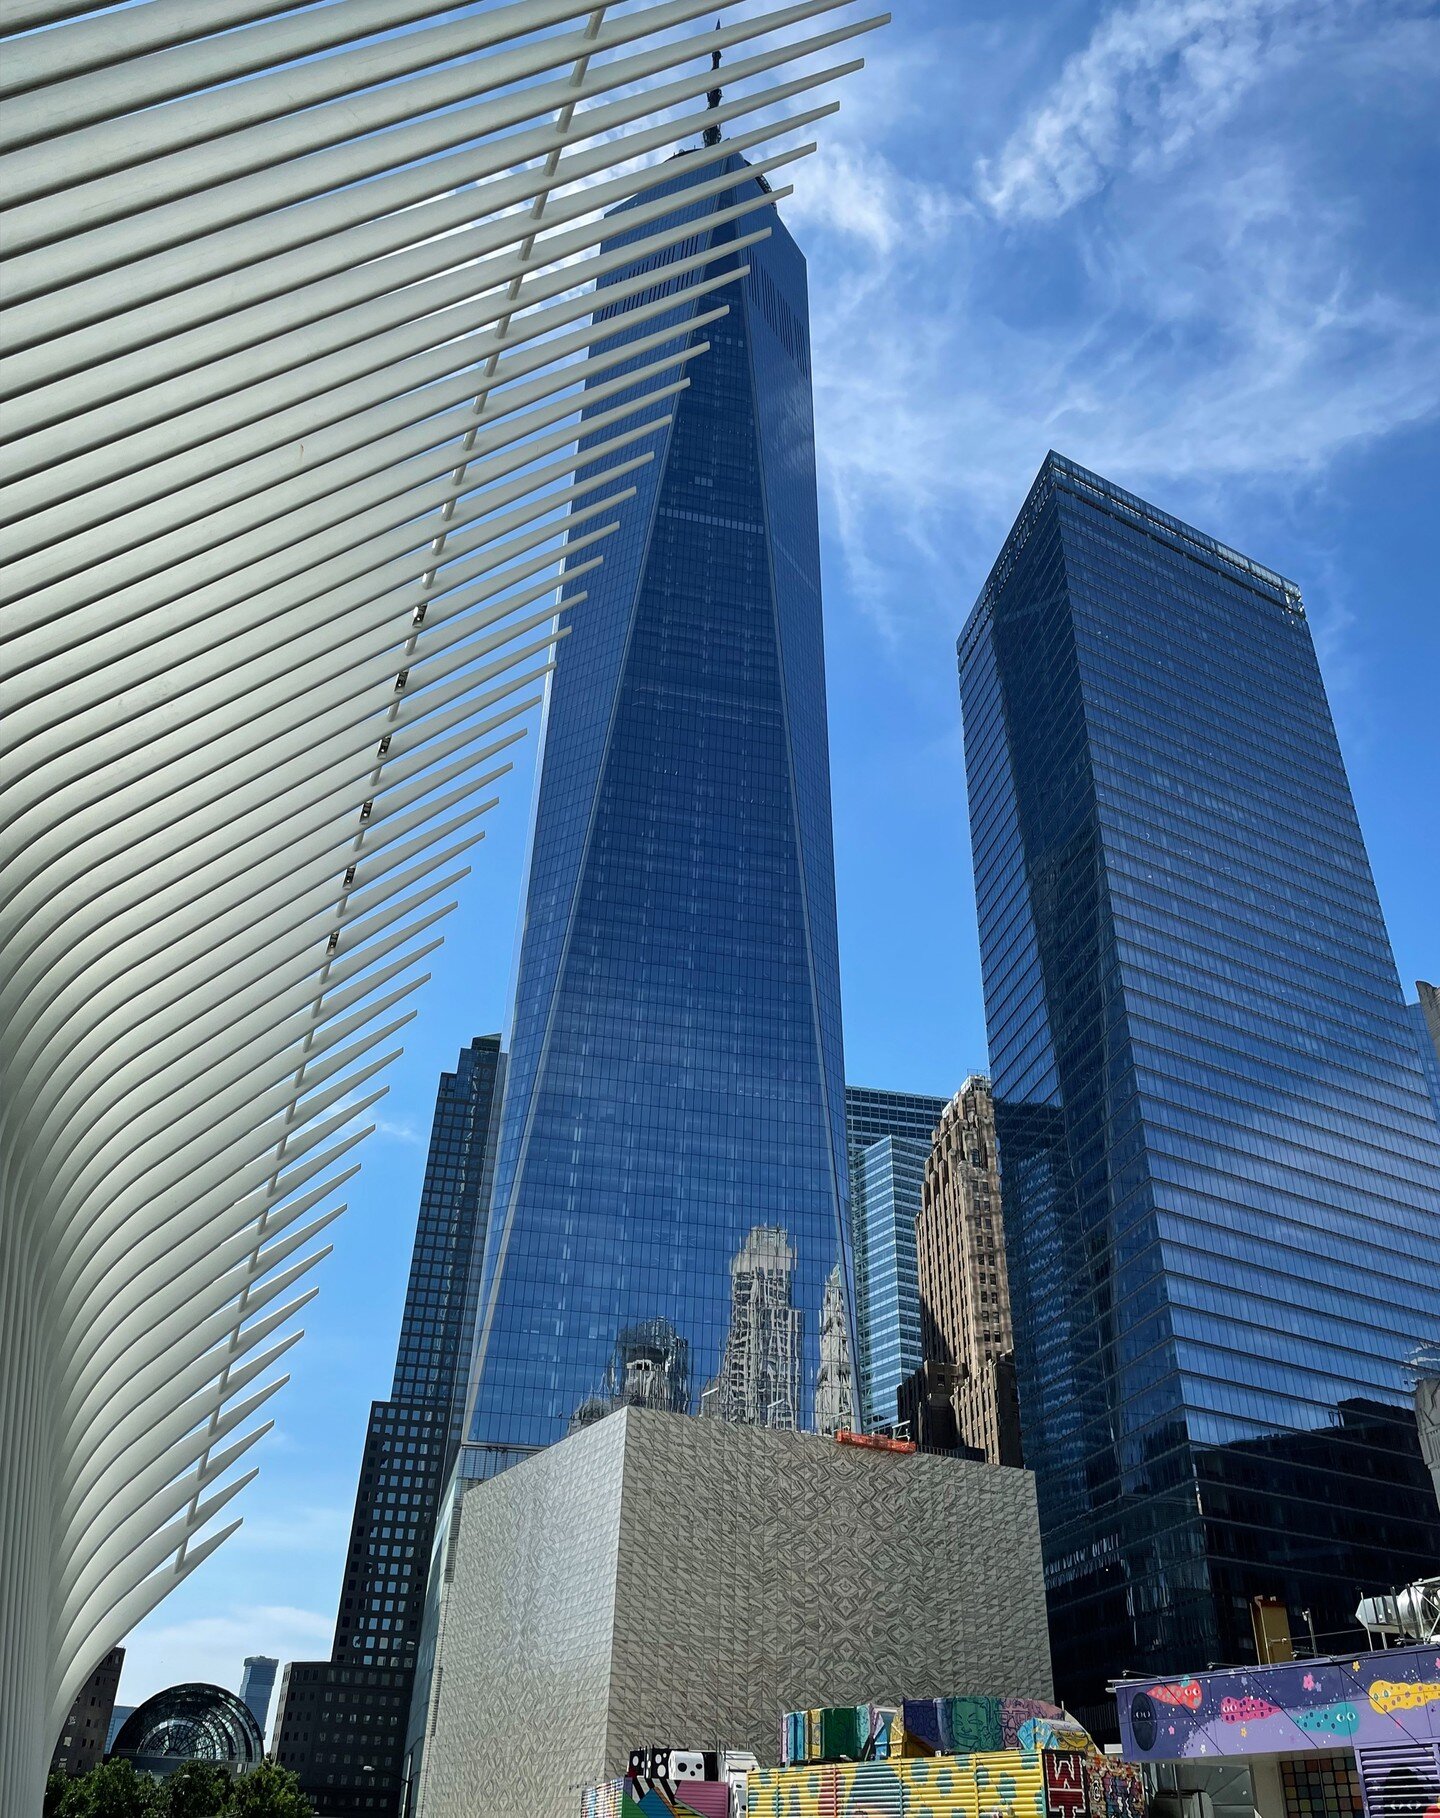 #calatravaarchitecture
#calatravanyc #Manhattan